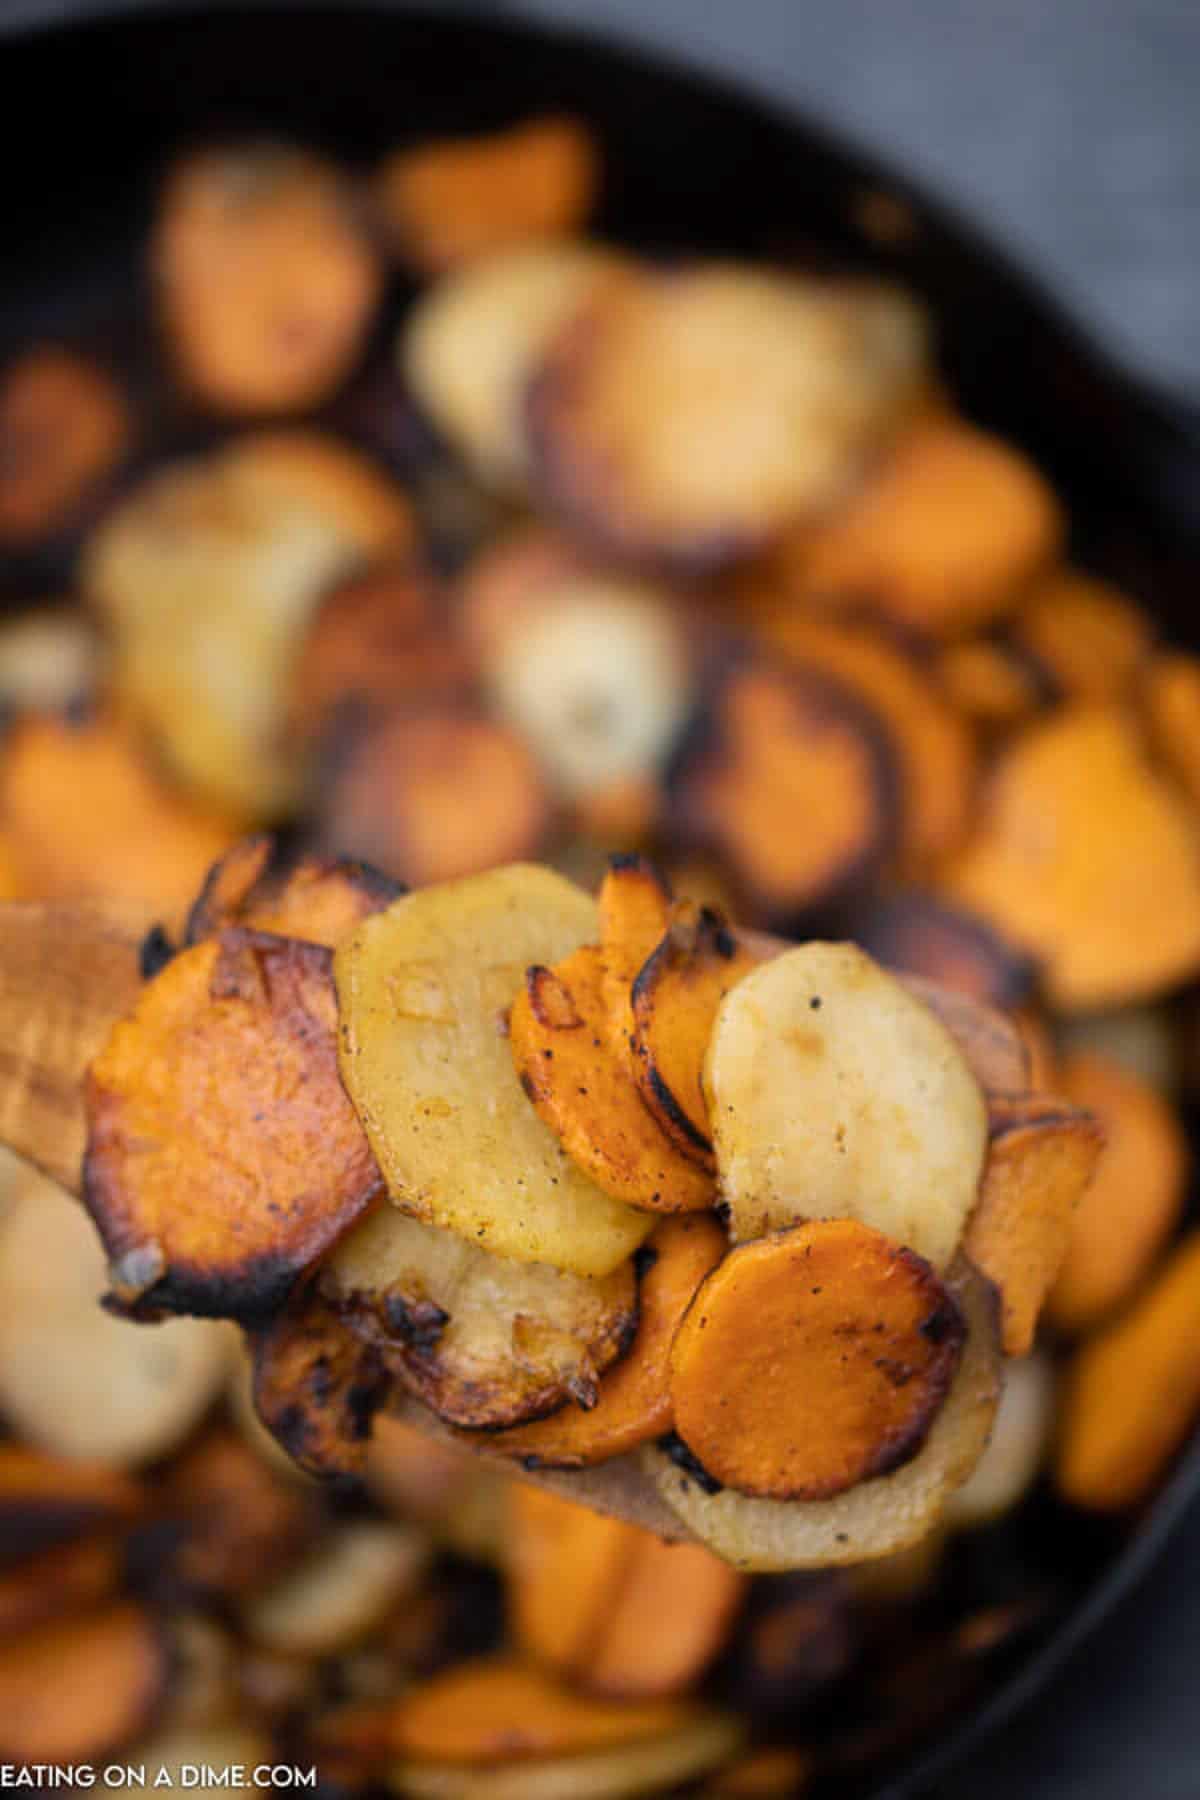 pan fried potatoes and sweet potatoes